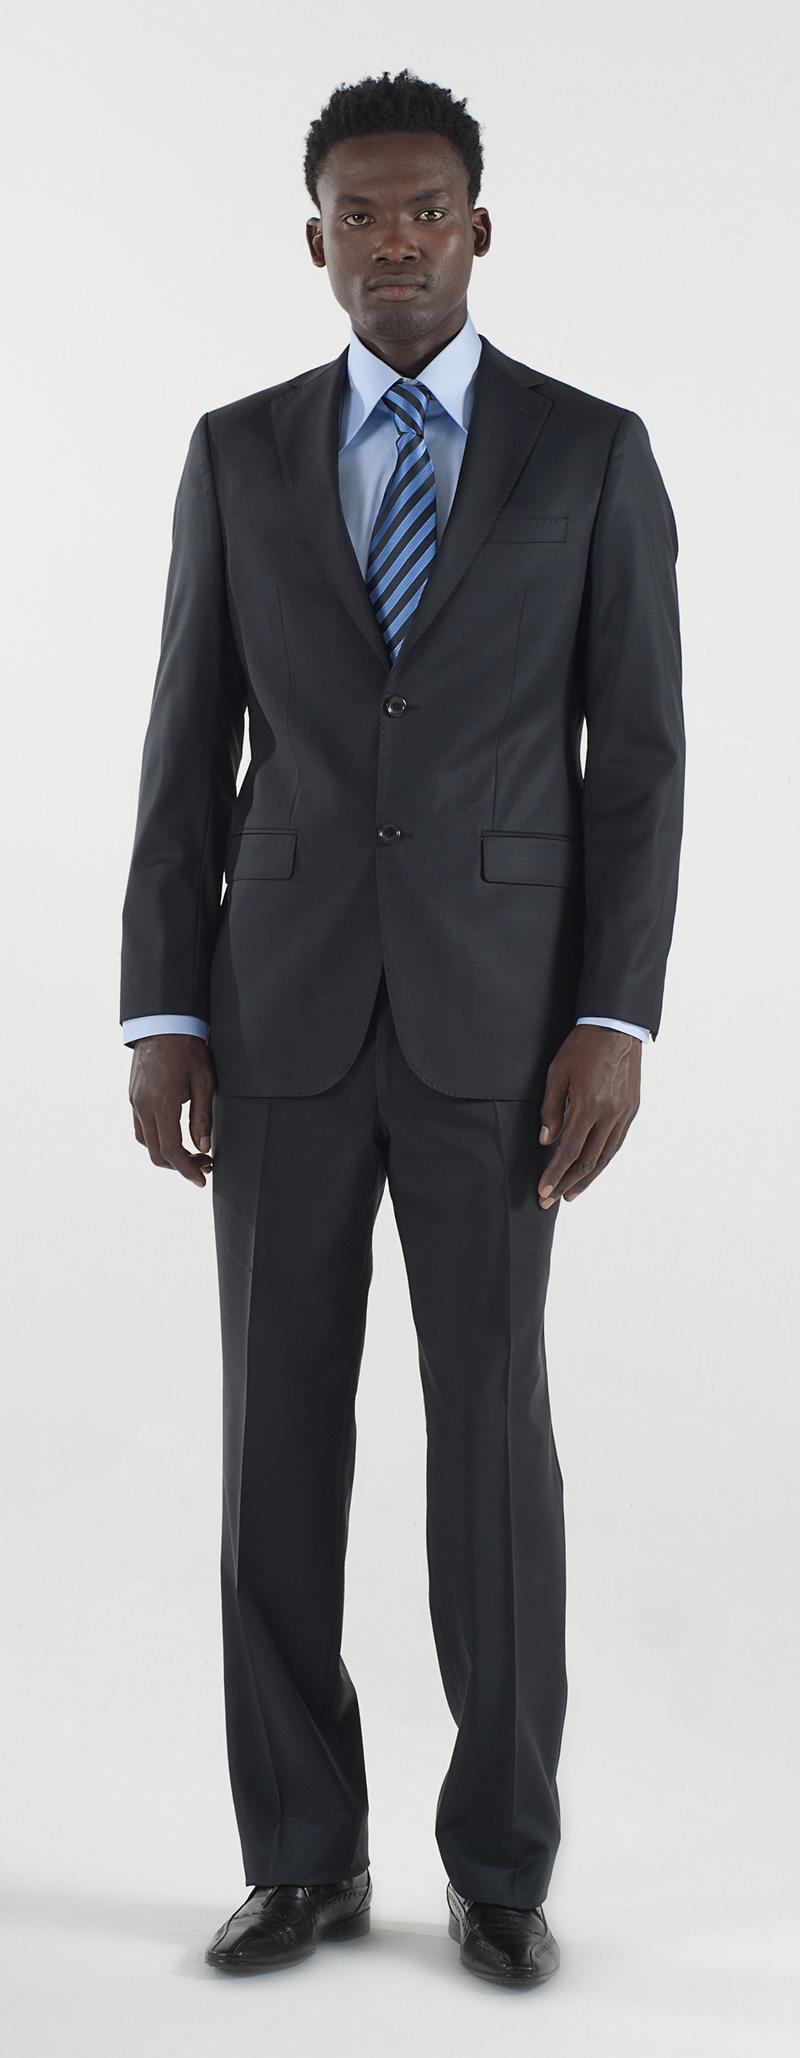 s535wedding attire tuxedo tuxedos suits for men – Wholesale s535wedding ...